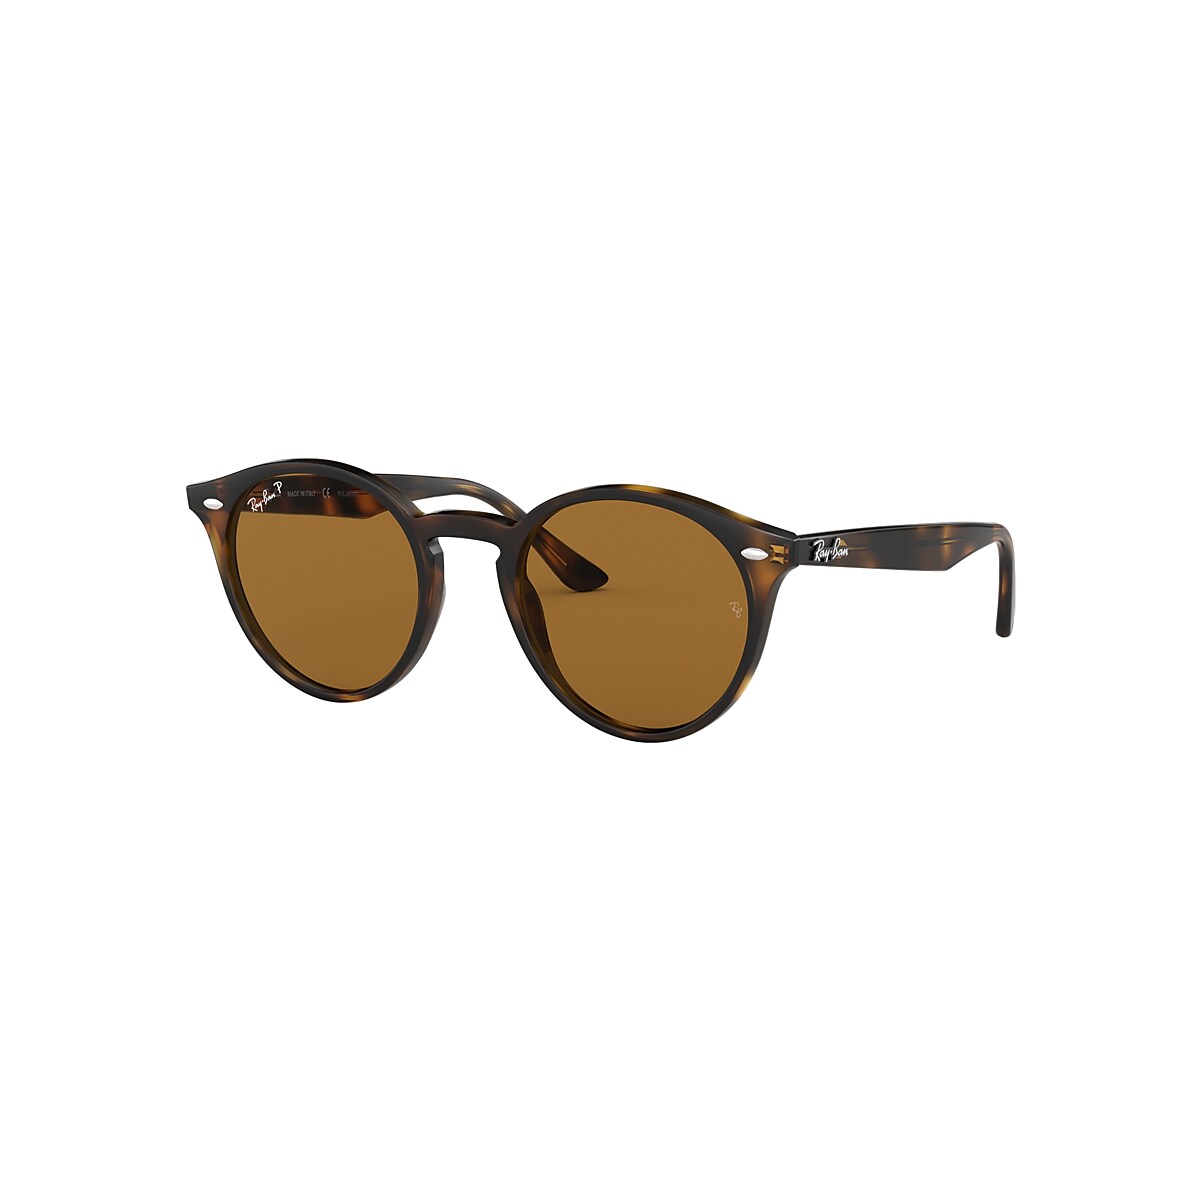 RB2180 Sunglasses in Light Havana and Dark Brown | Ray-Ban®